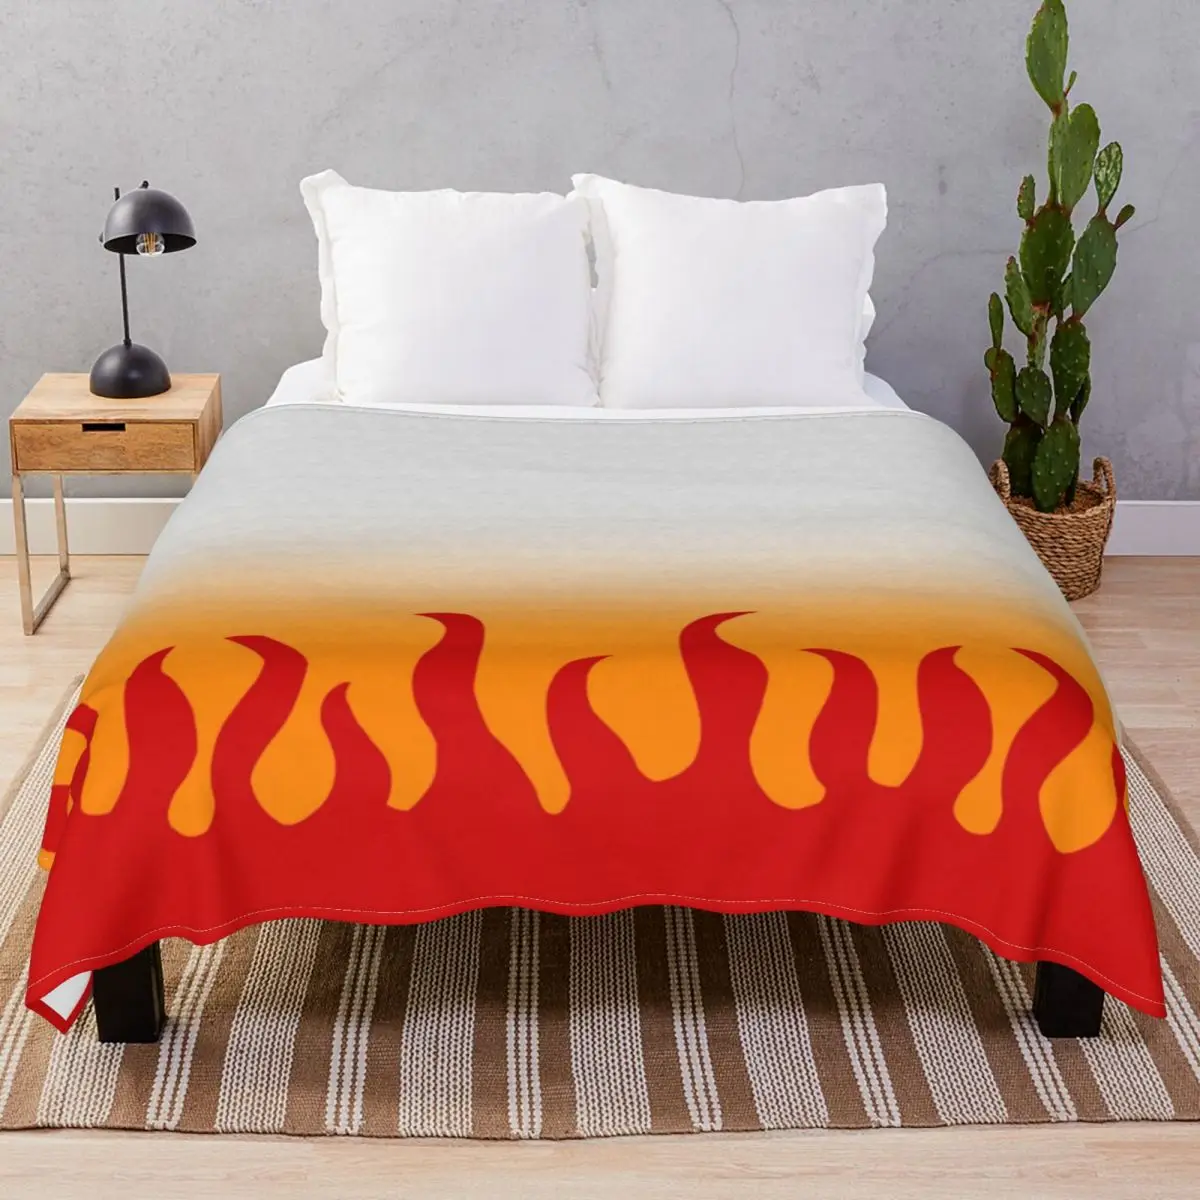 Demon Slayer Kyojuro Blankets Fleece Plush Print Lightweight Thin Throw Blanket for Bed Home Couch Camp Cinema